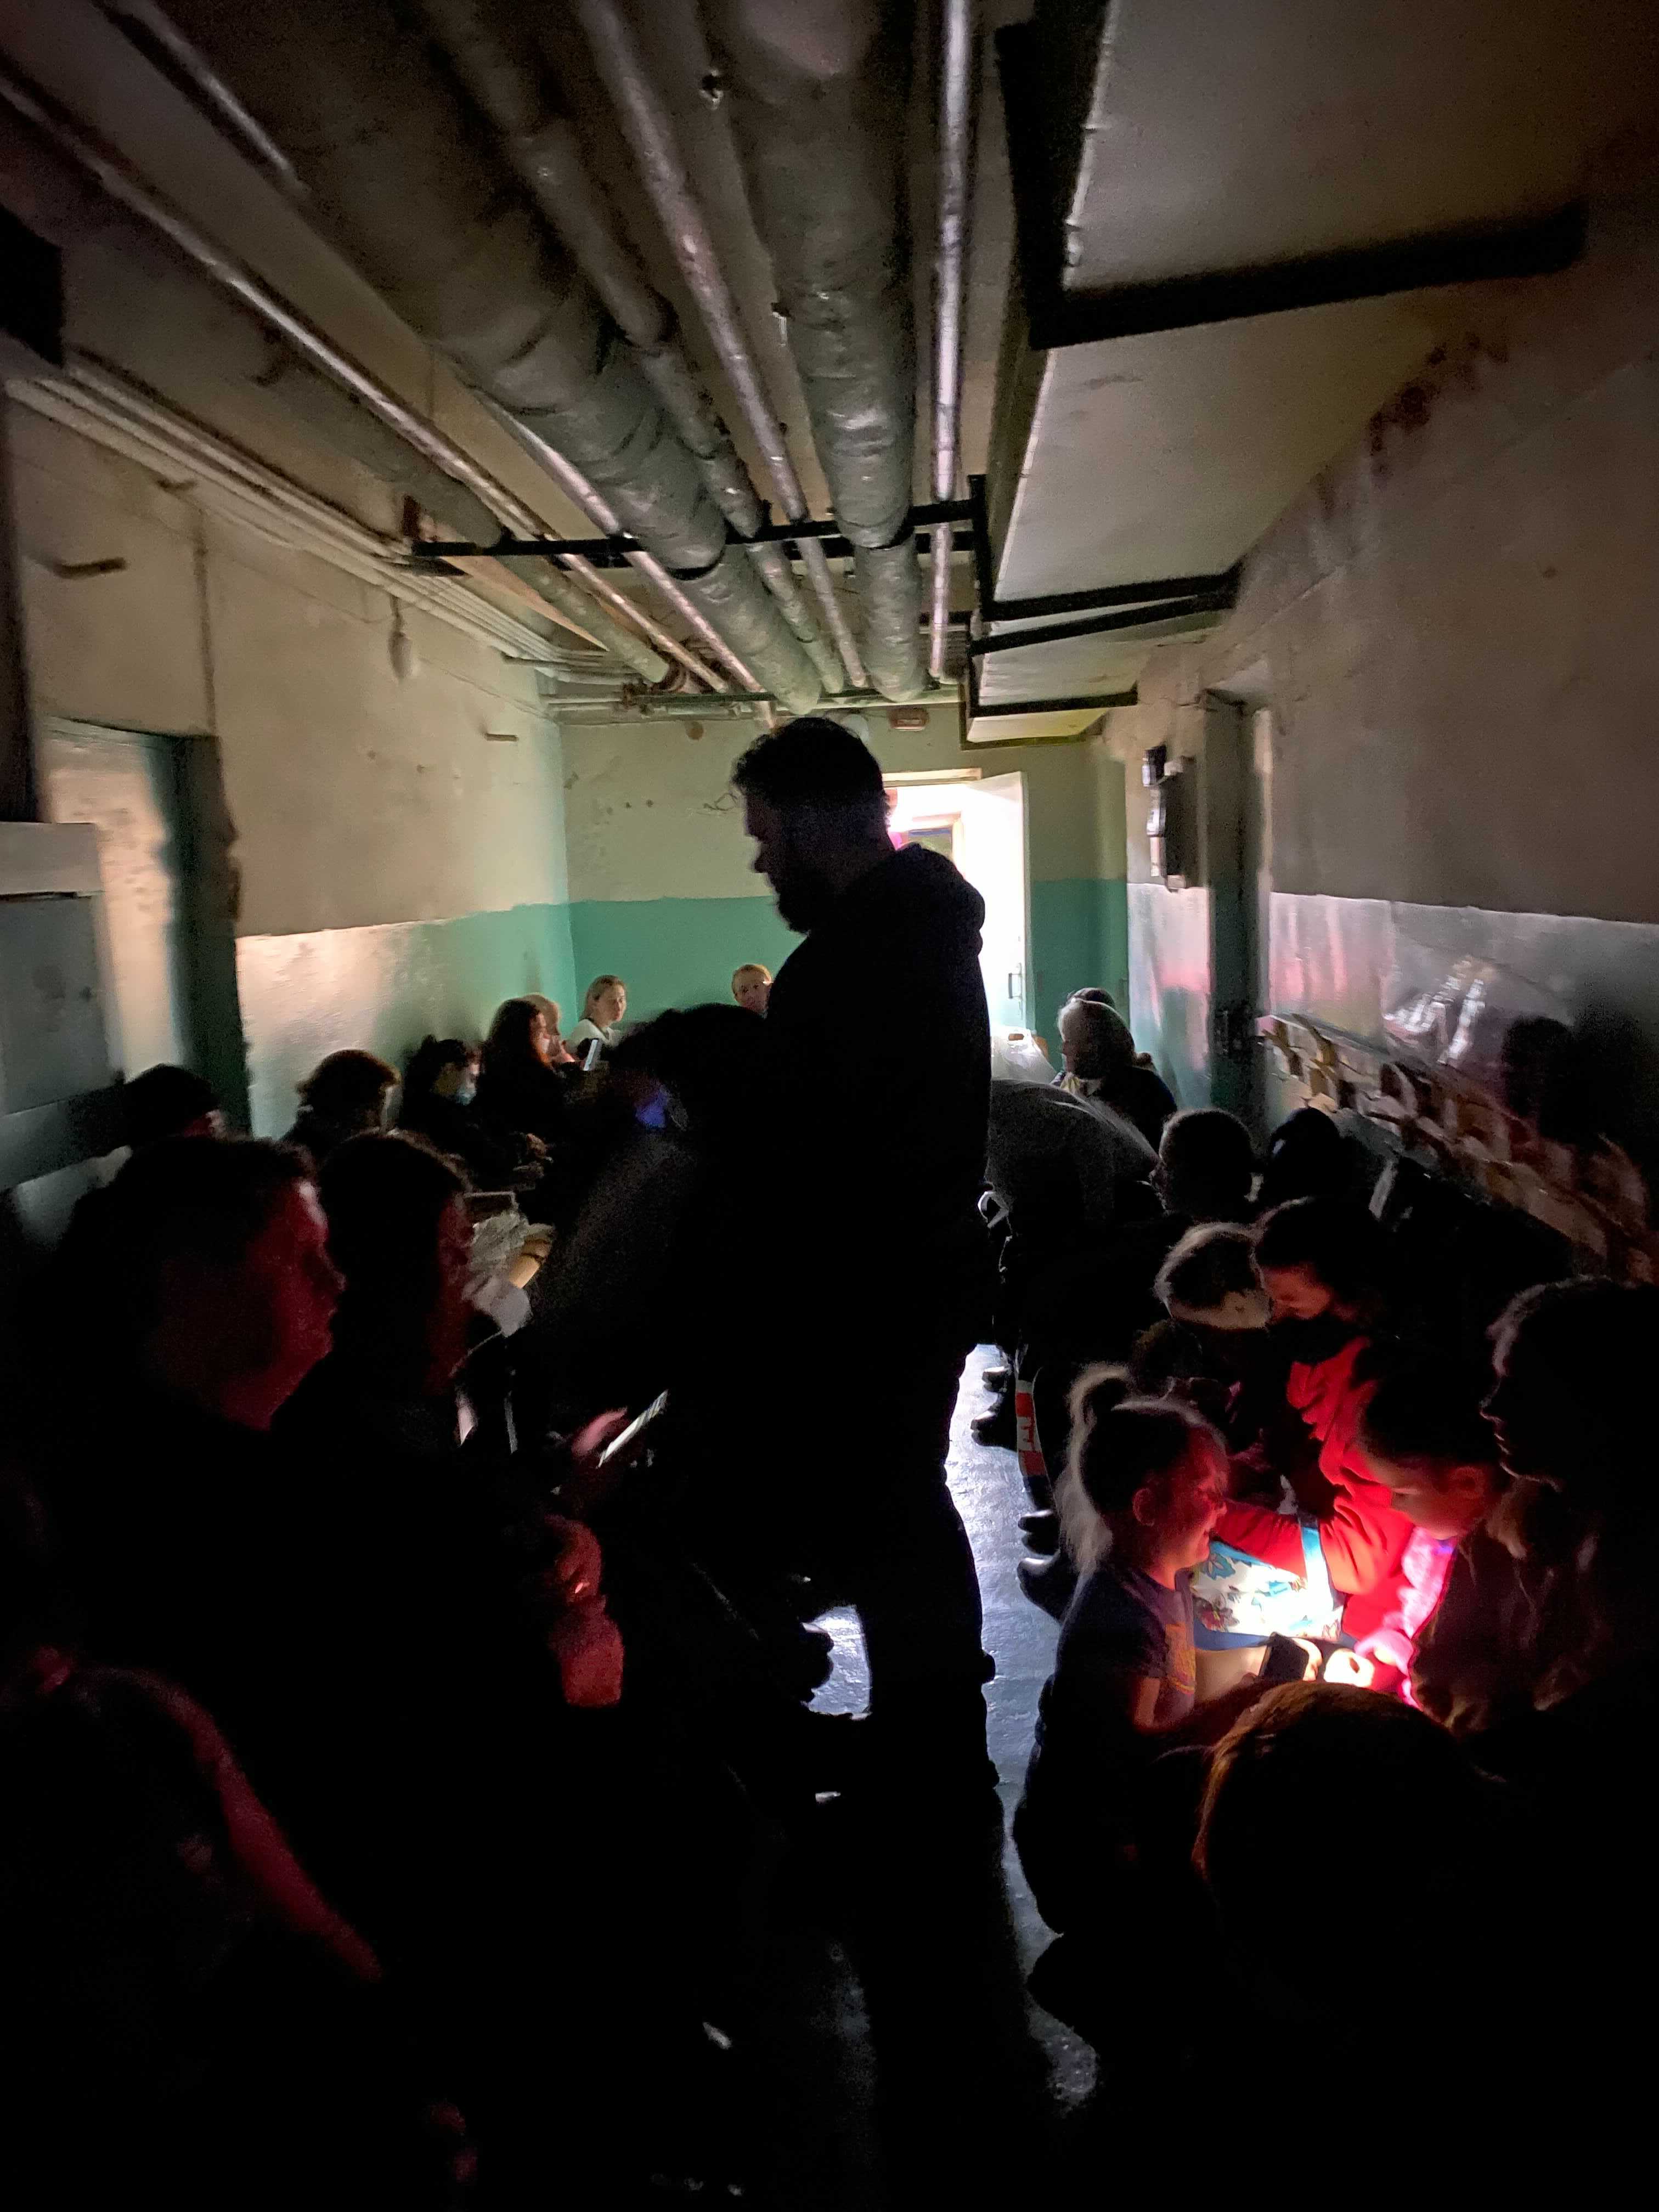 MacPaw's Nina Bohush shelters in a basement bomb shelter during the Ukraine war.